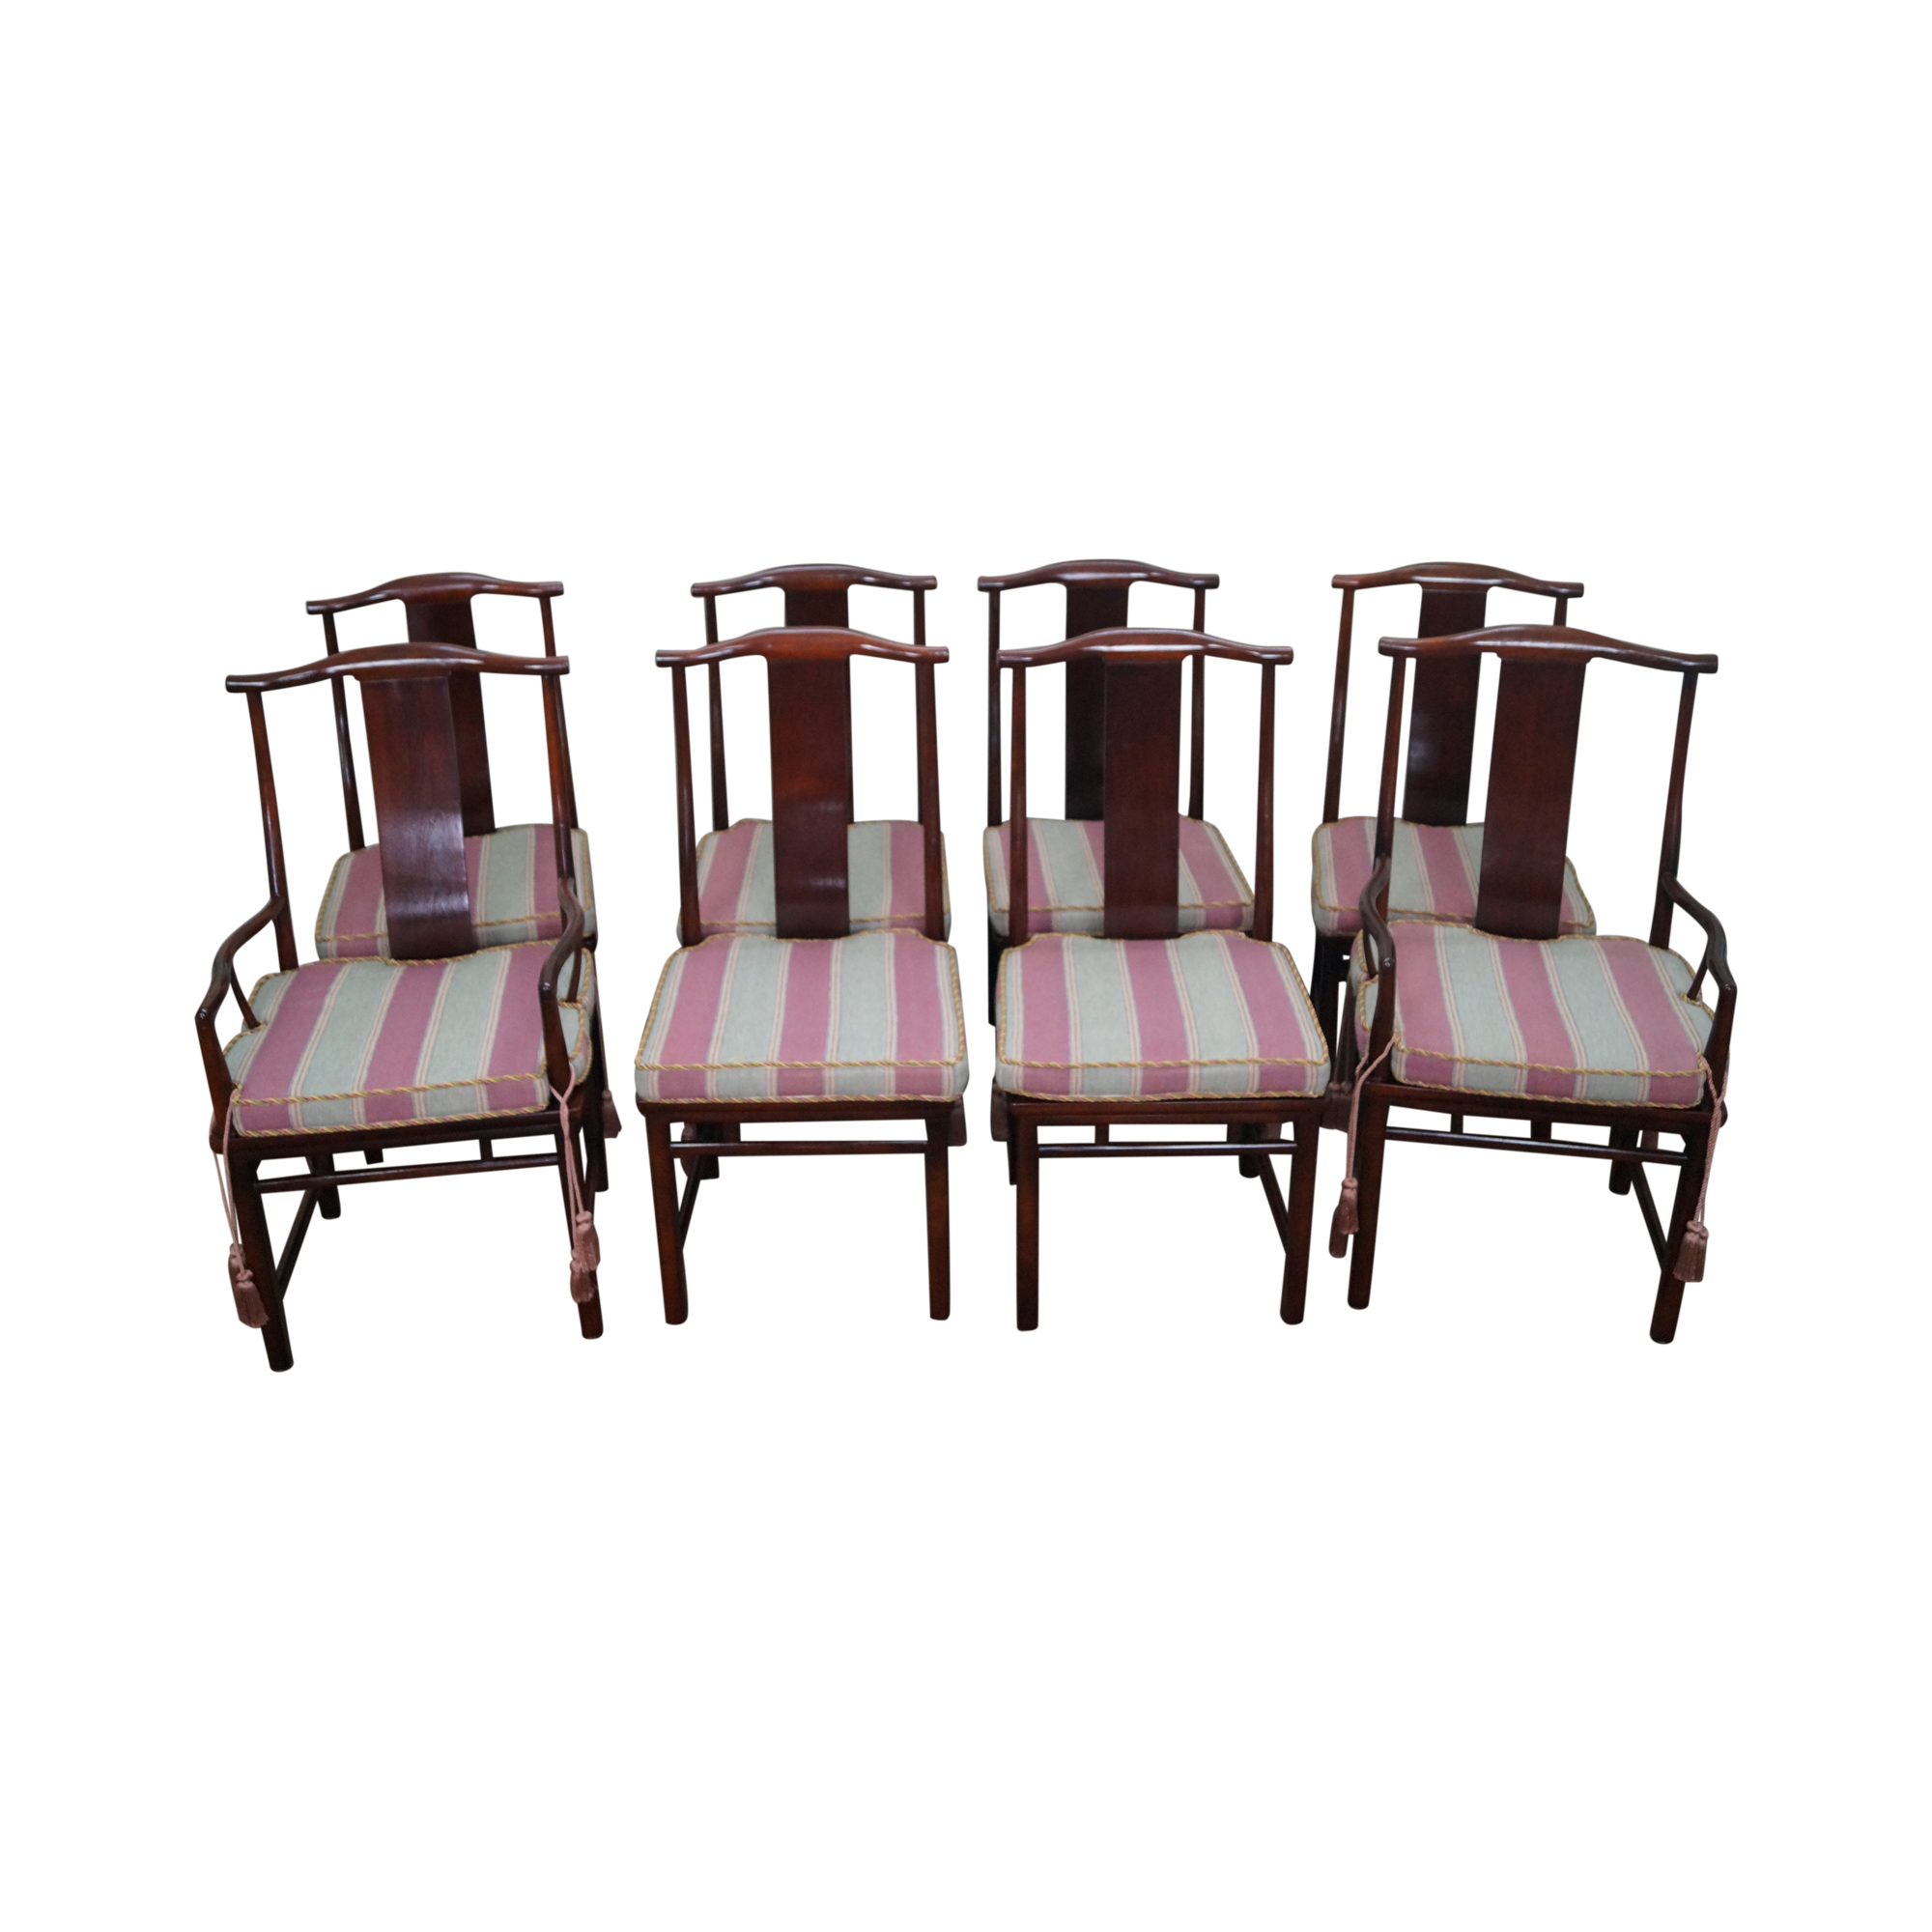 Asian mahogany chairs